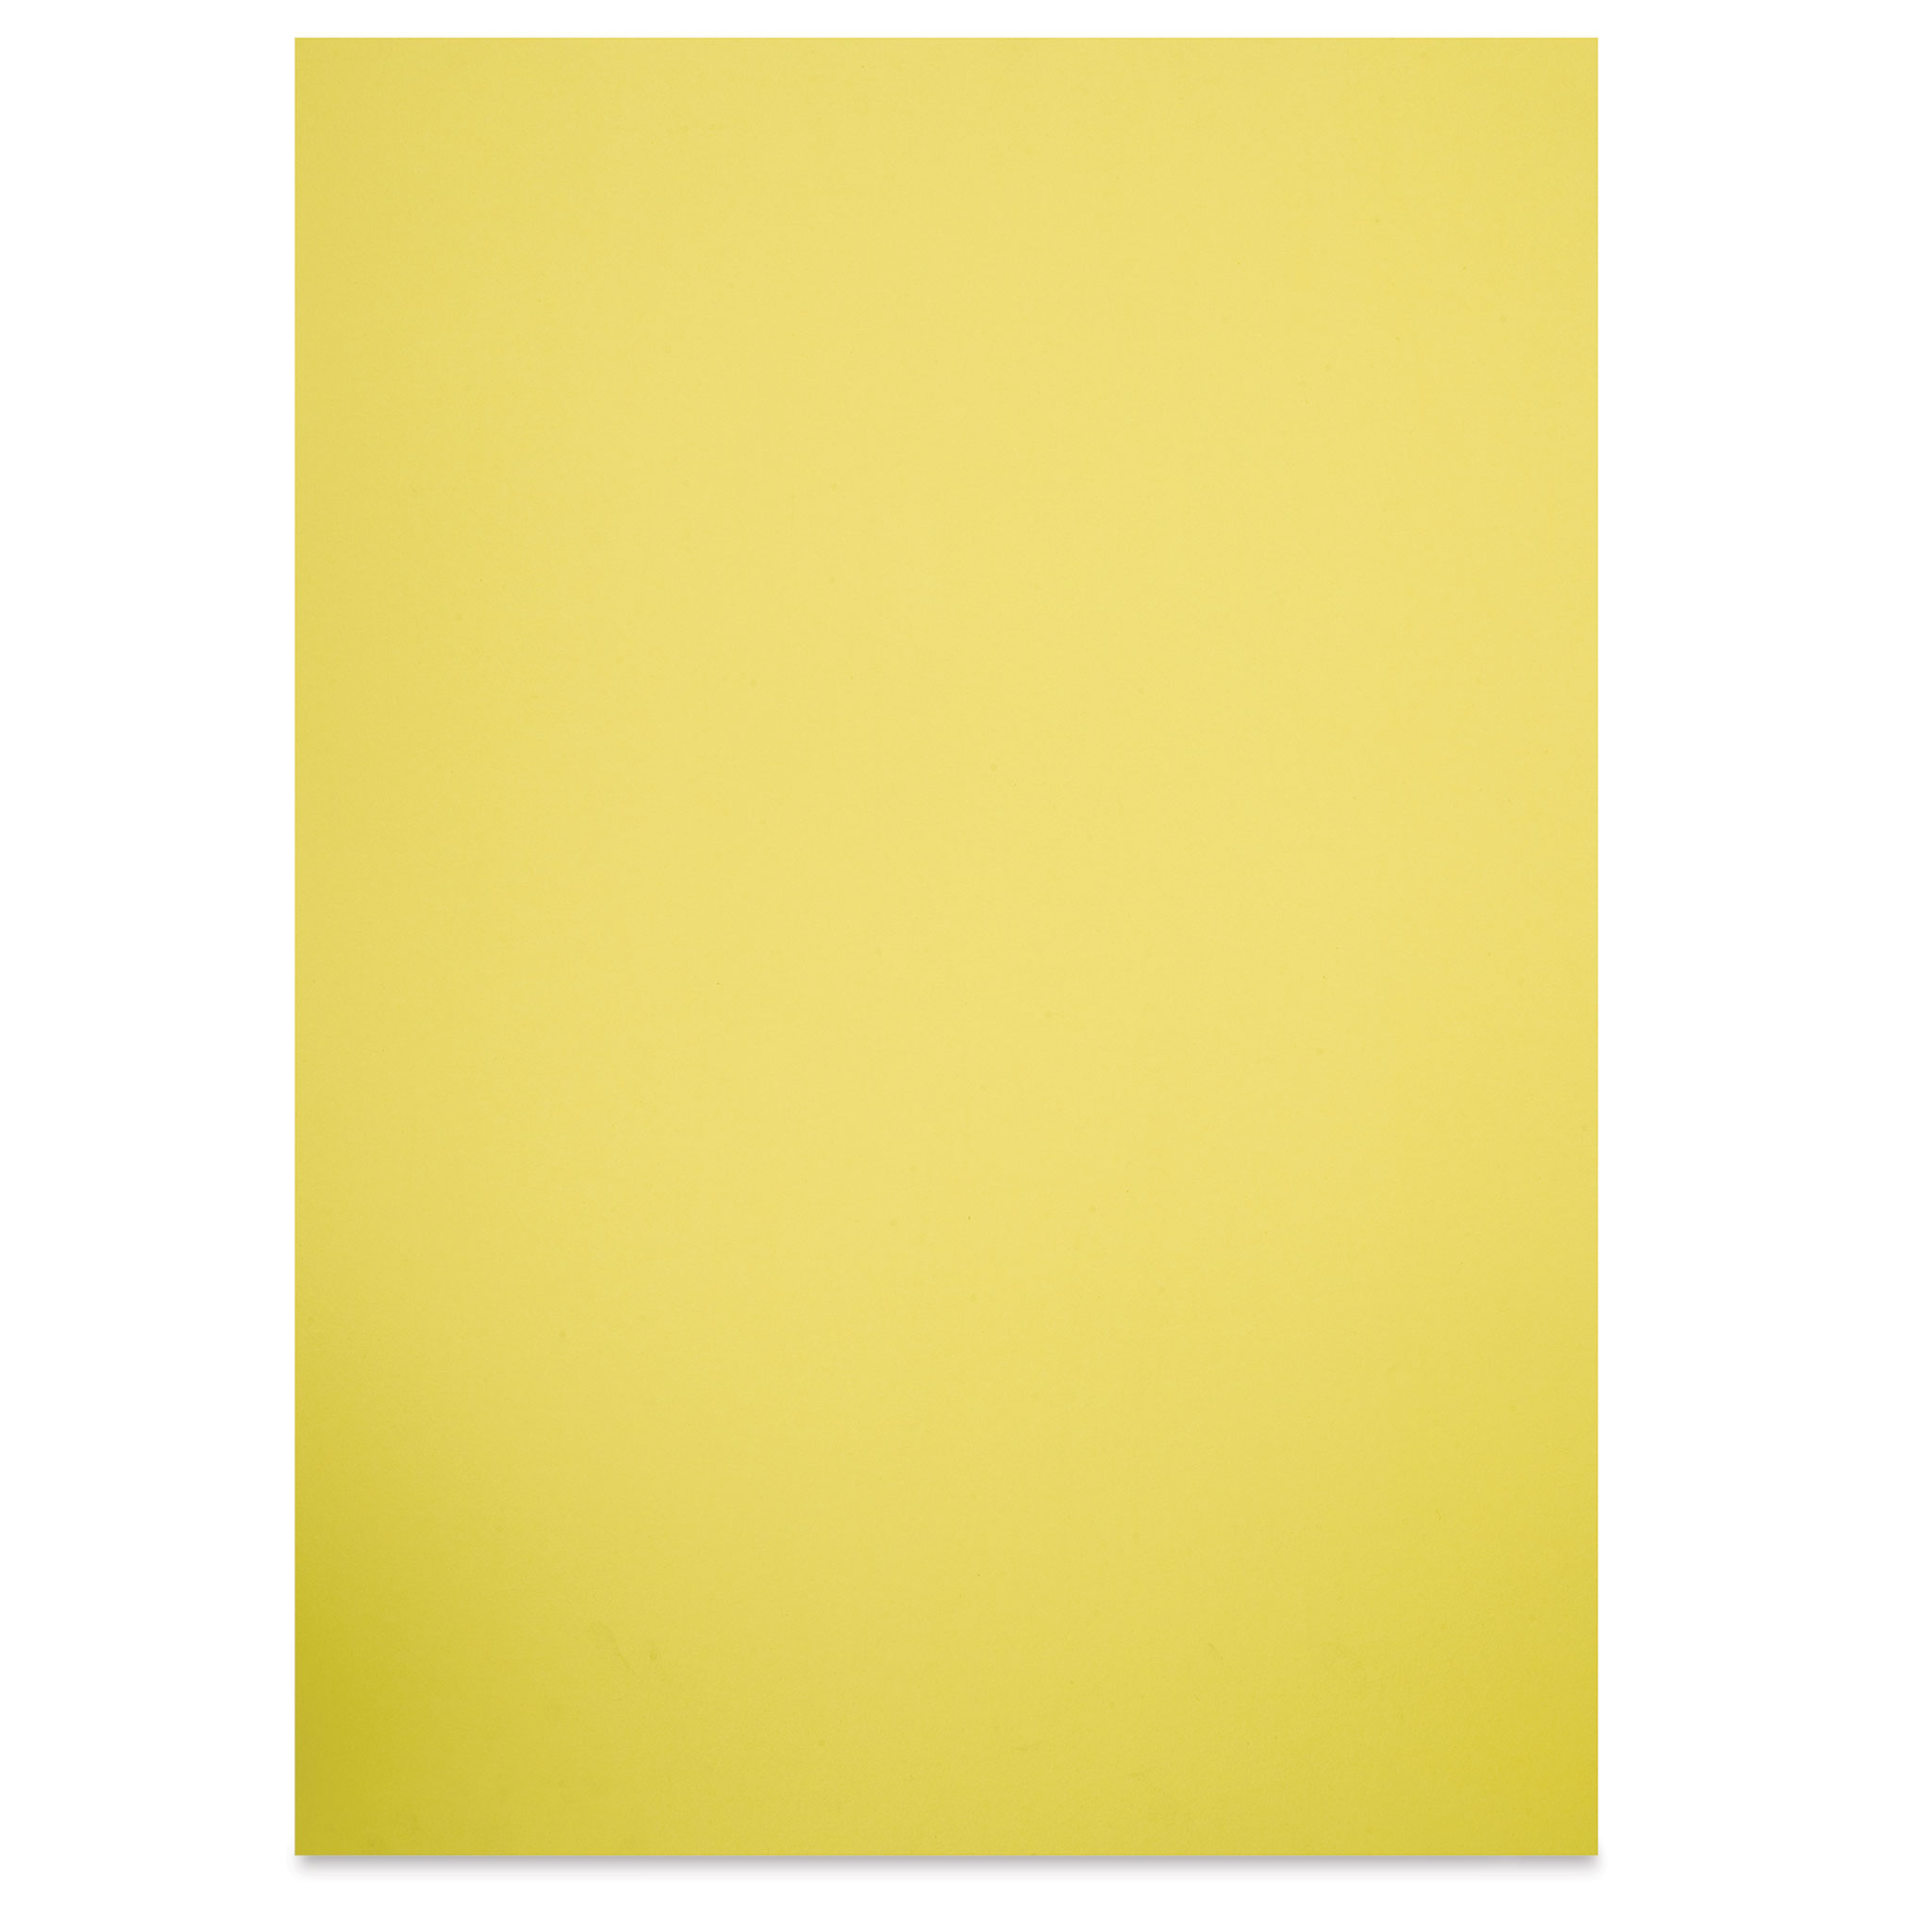 Blick Premium Construction Paper - 19-1/2 x 27-1/2, Yellow Orange, Single Sheet